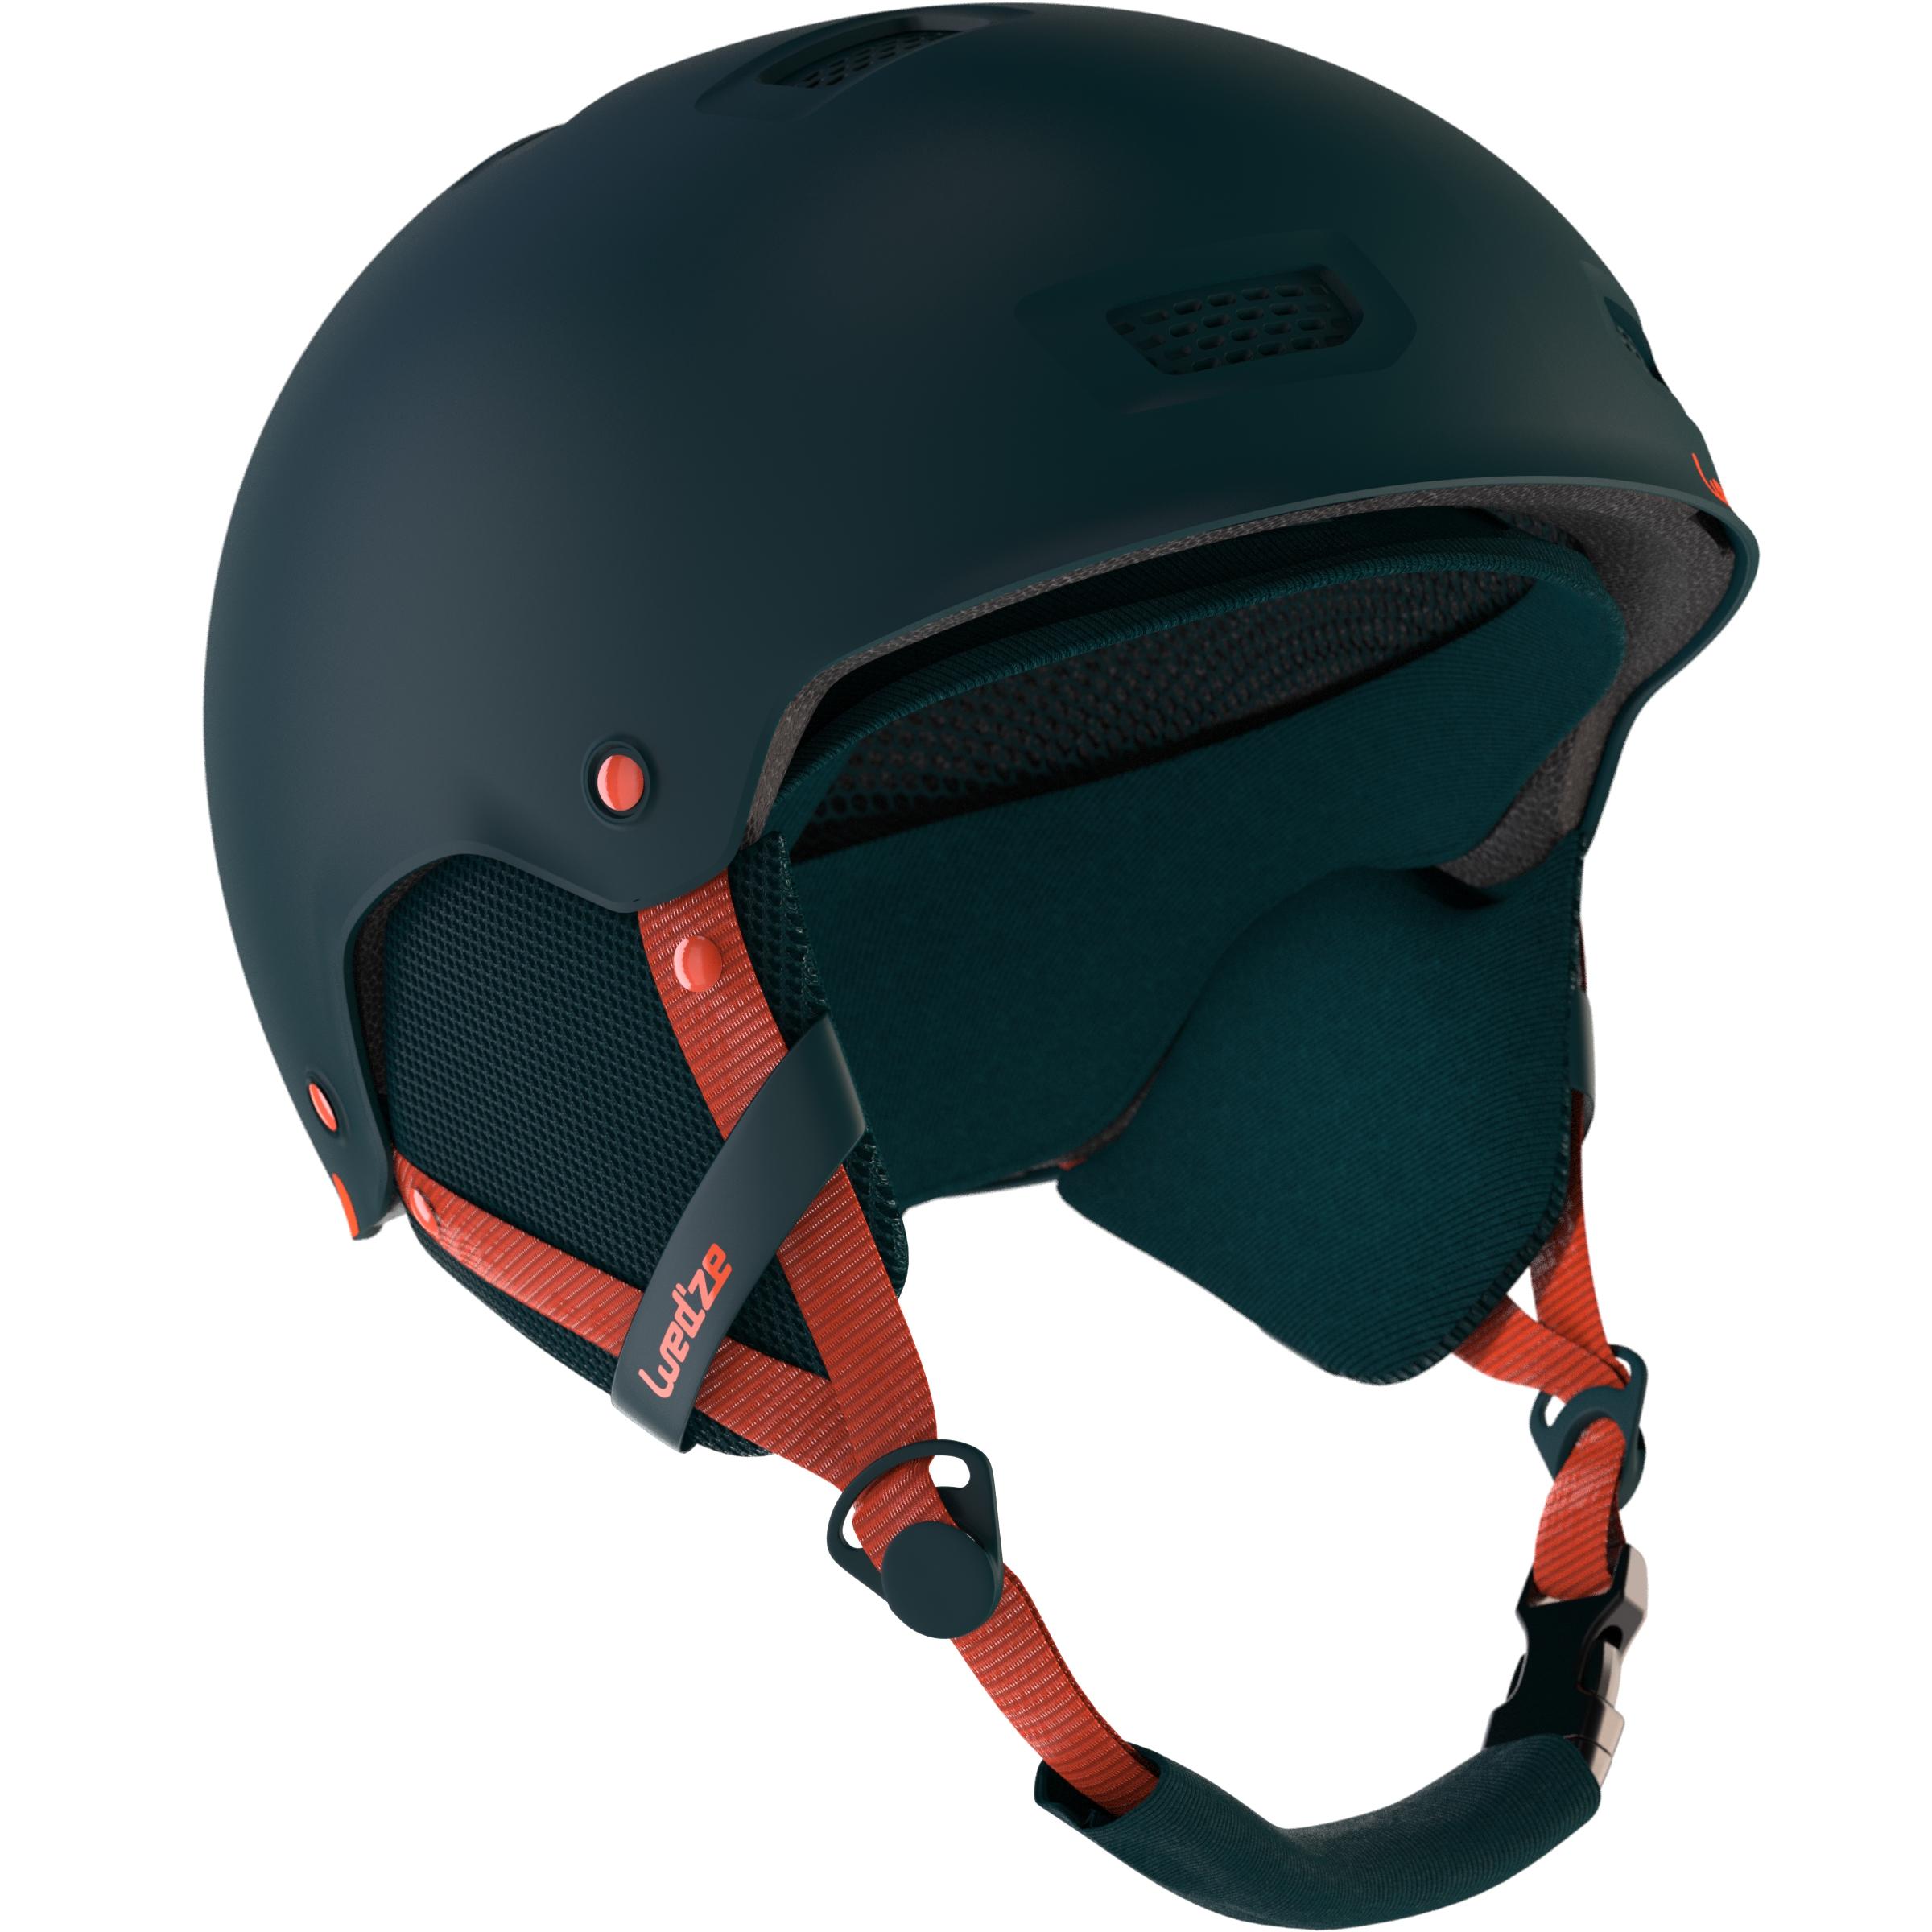 DREAMSCAPE Adult ski and snowboarding helmet H-FS 300 blue/orange.